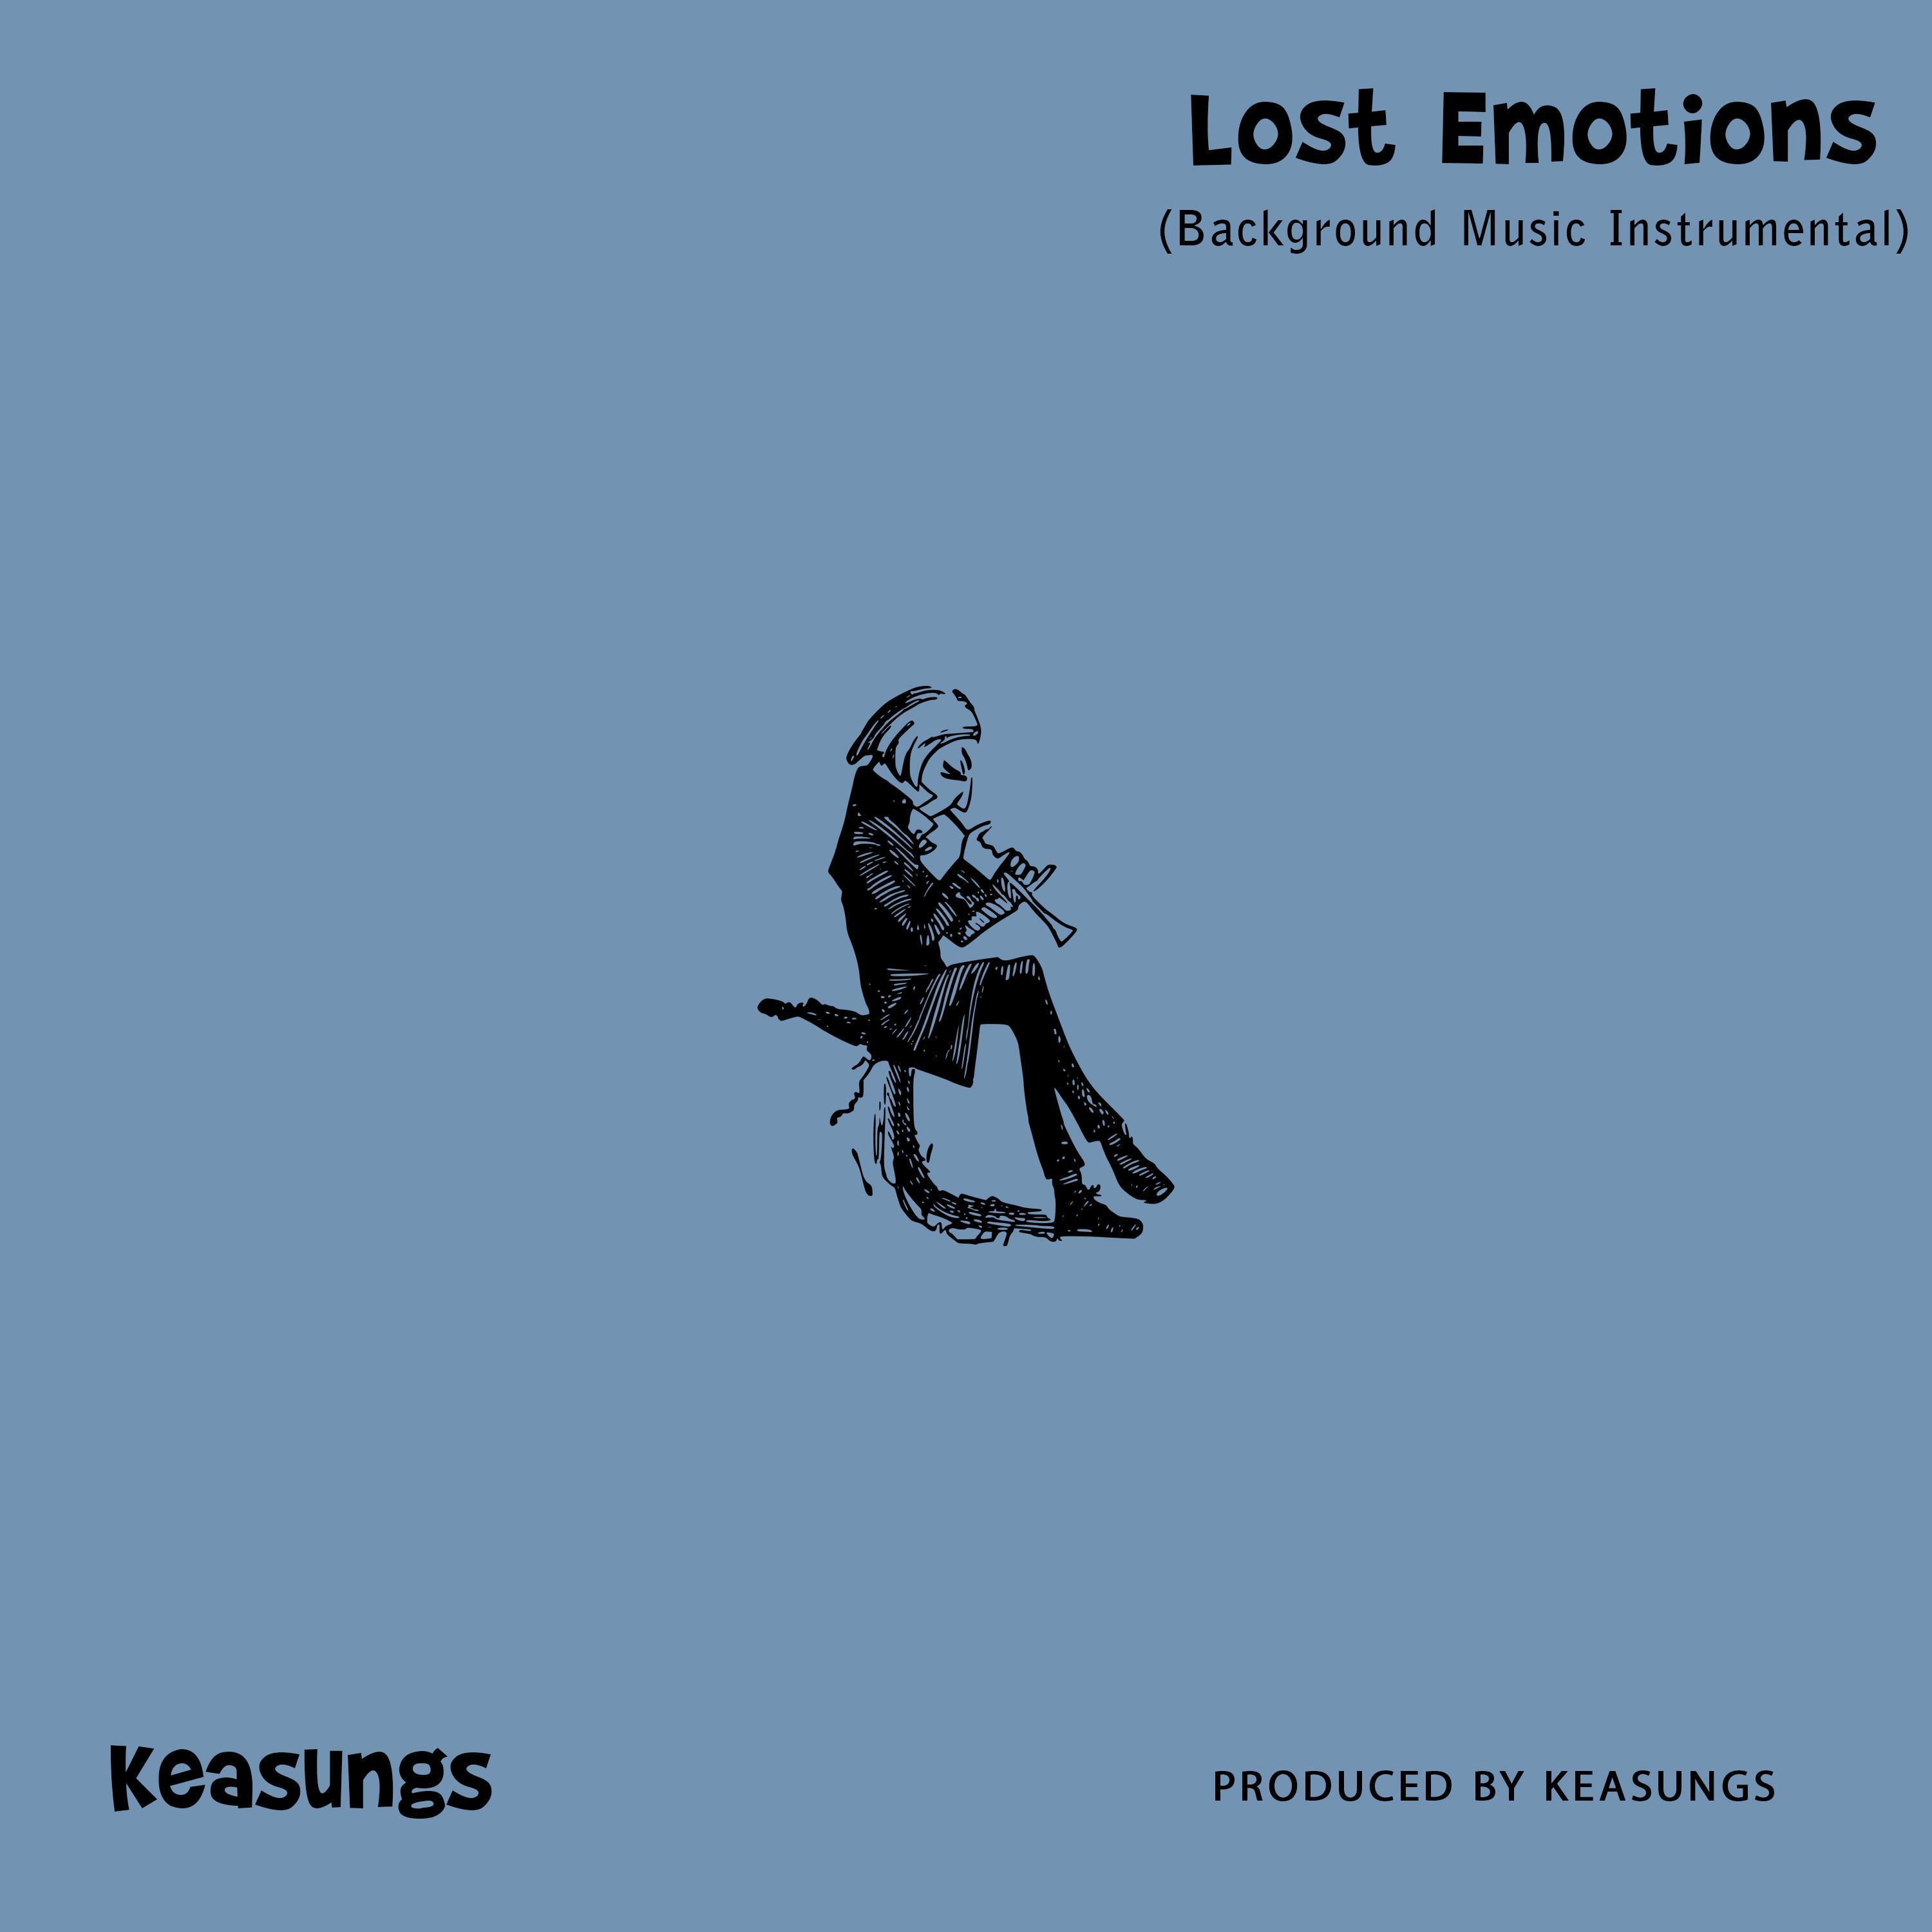 Keasungs - Lost Emotions (Background Music Instrumental)